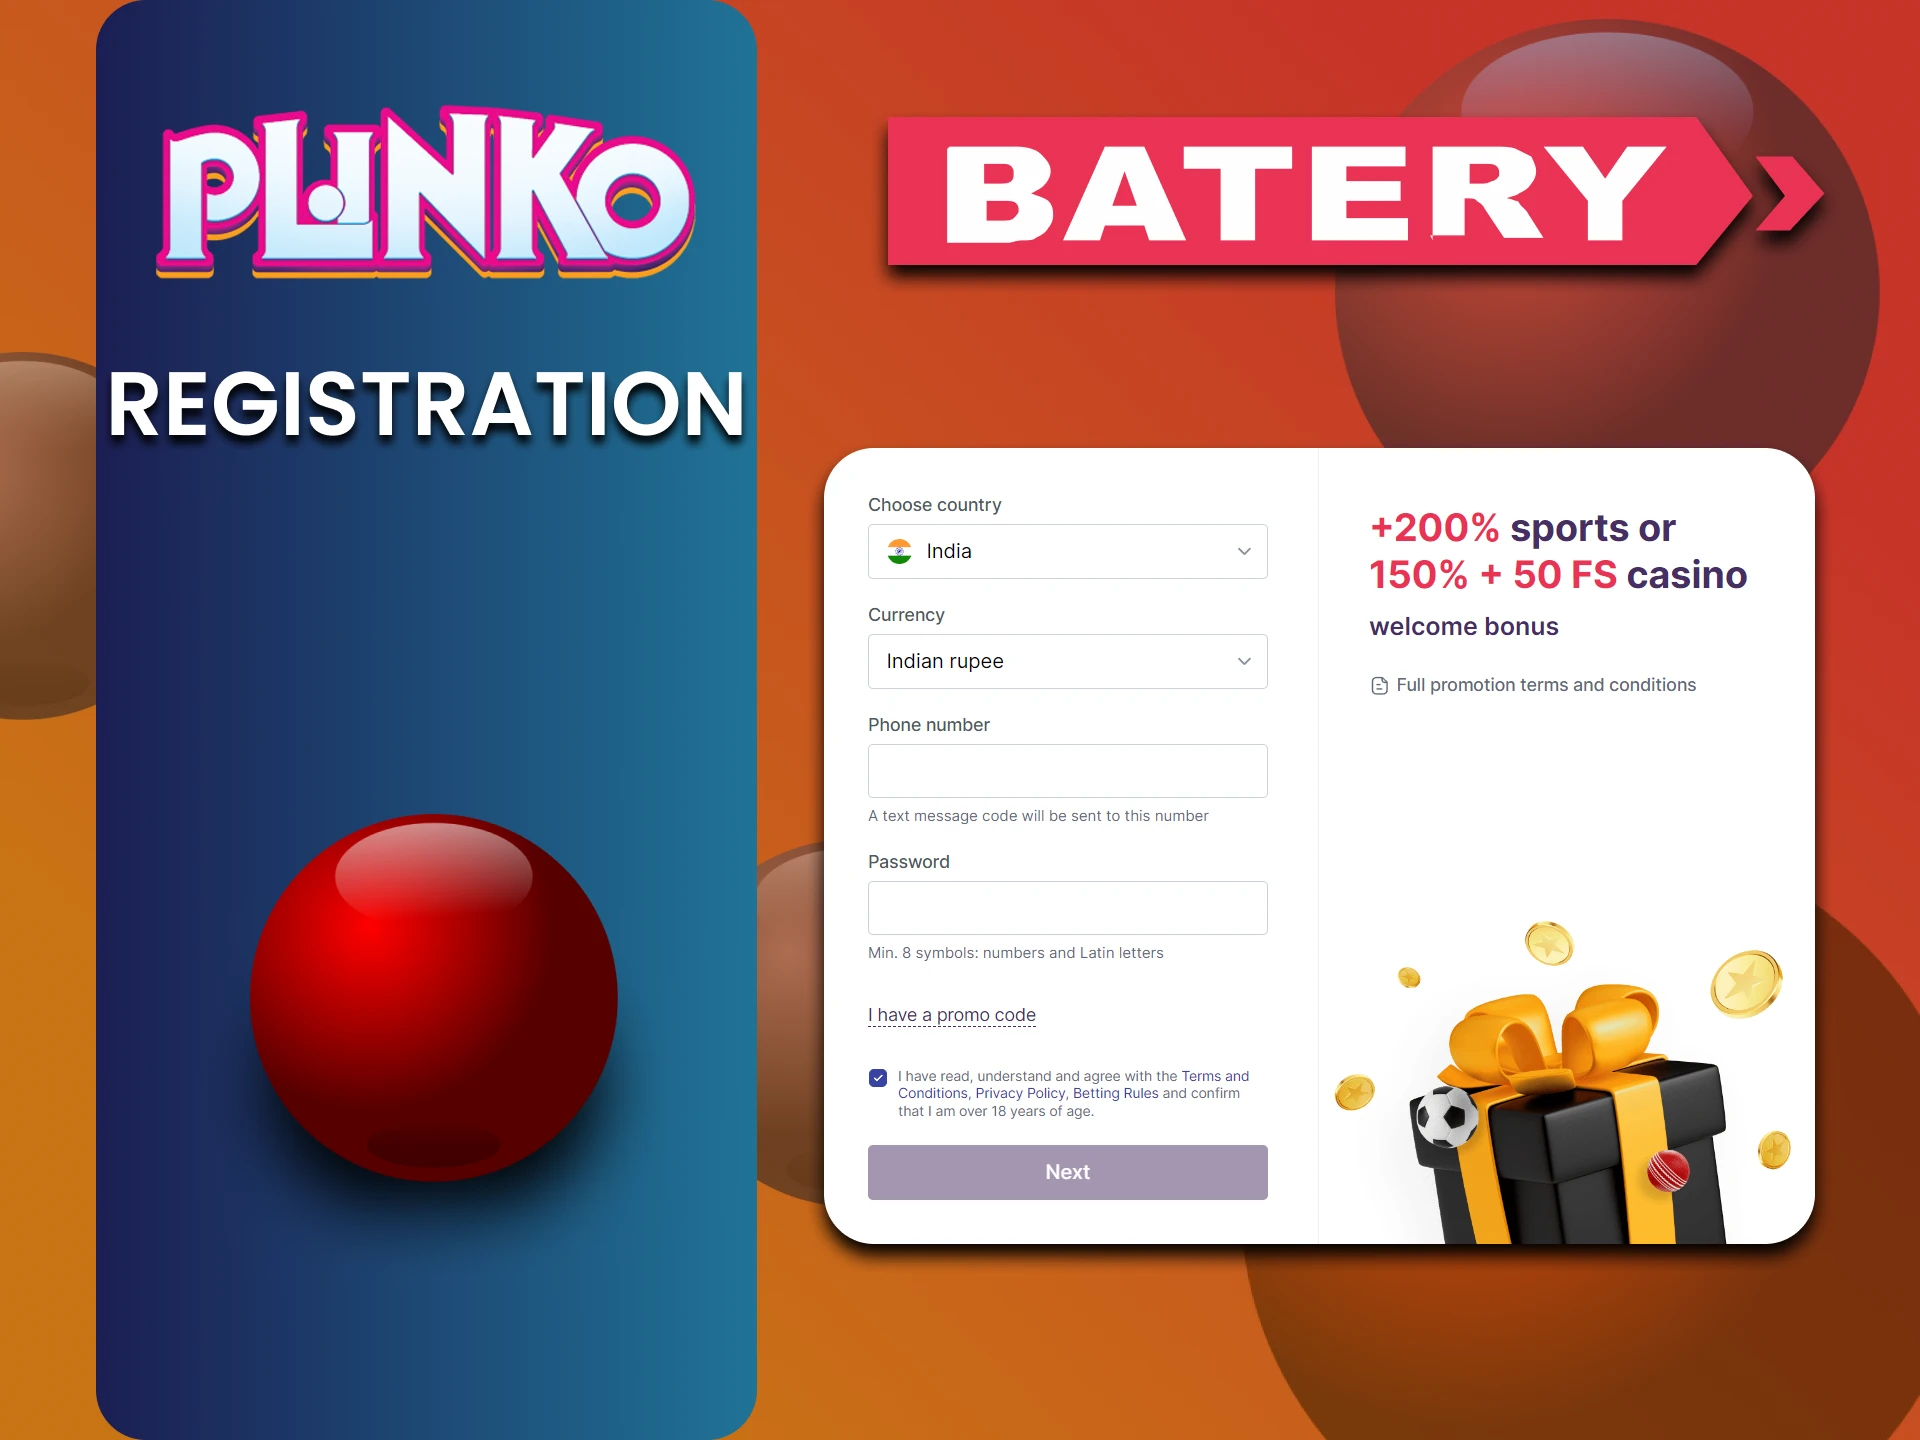 Create an account on Batery and play Plinko.